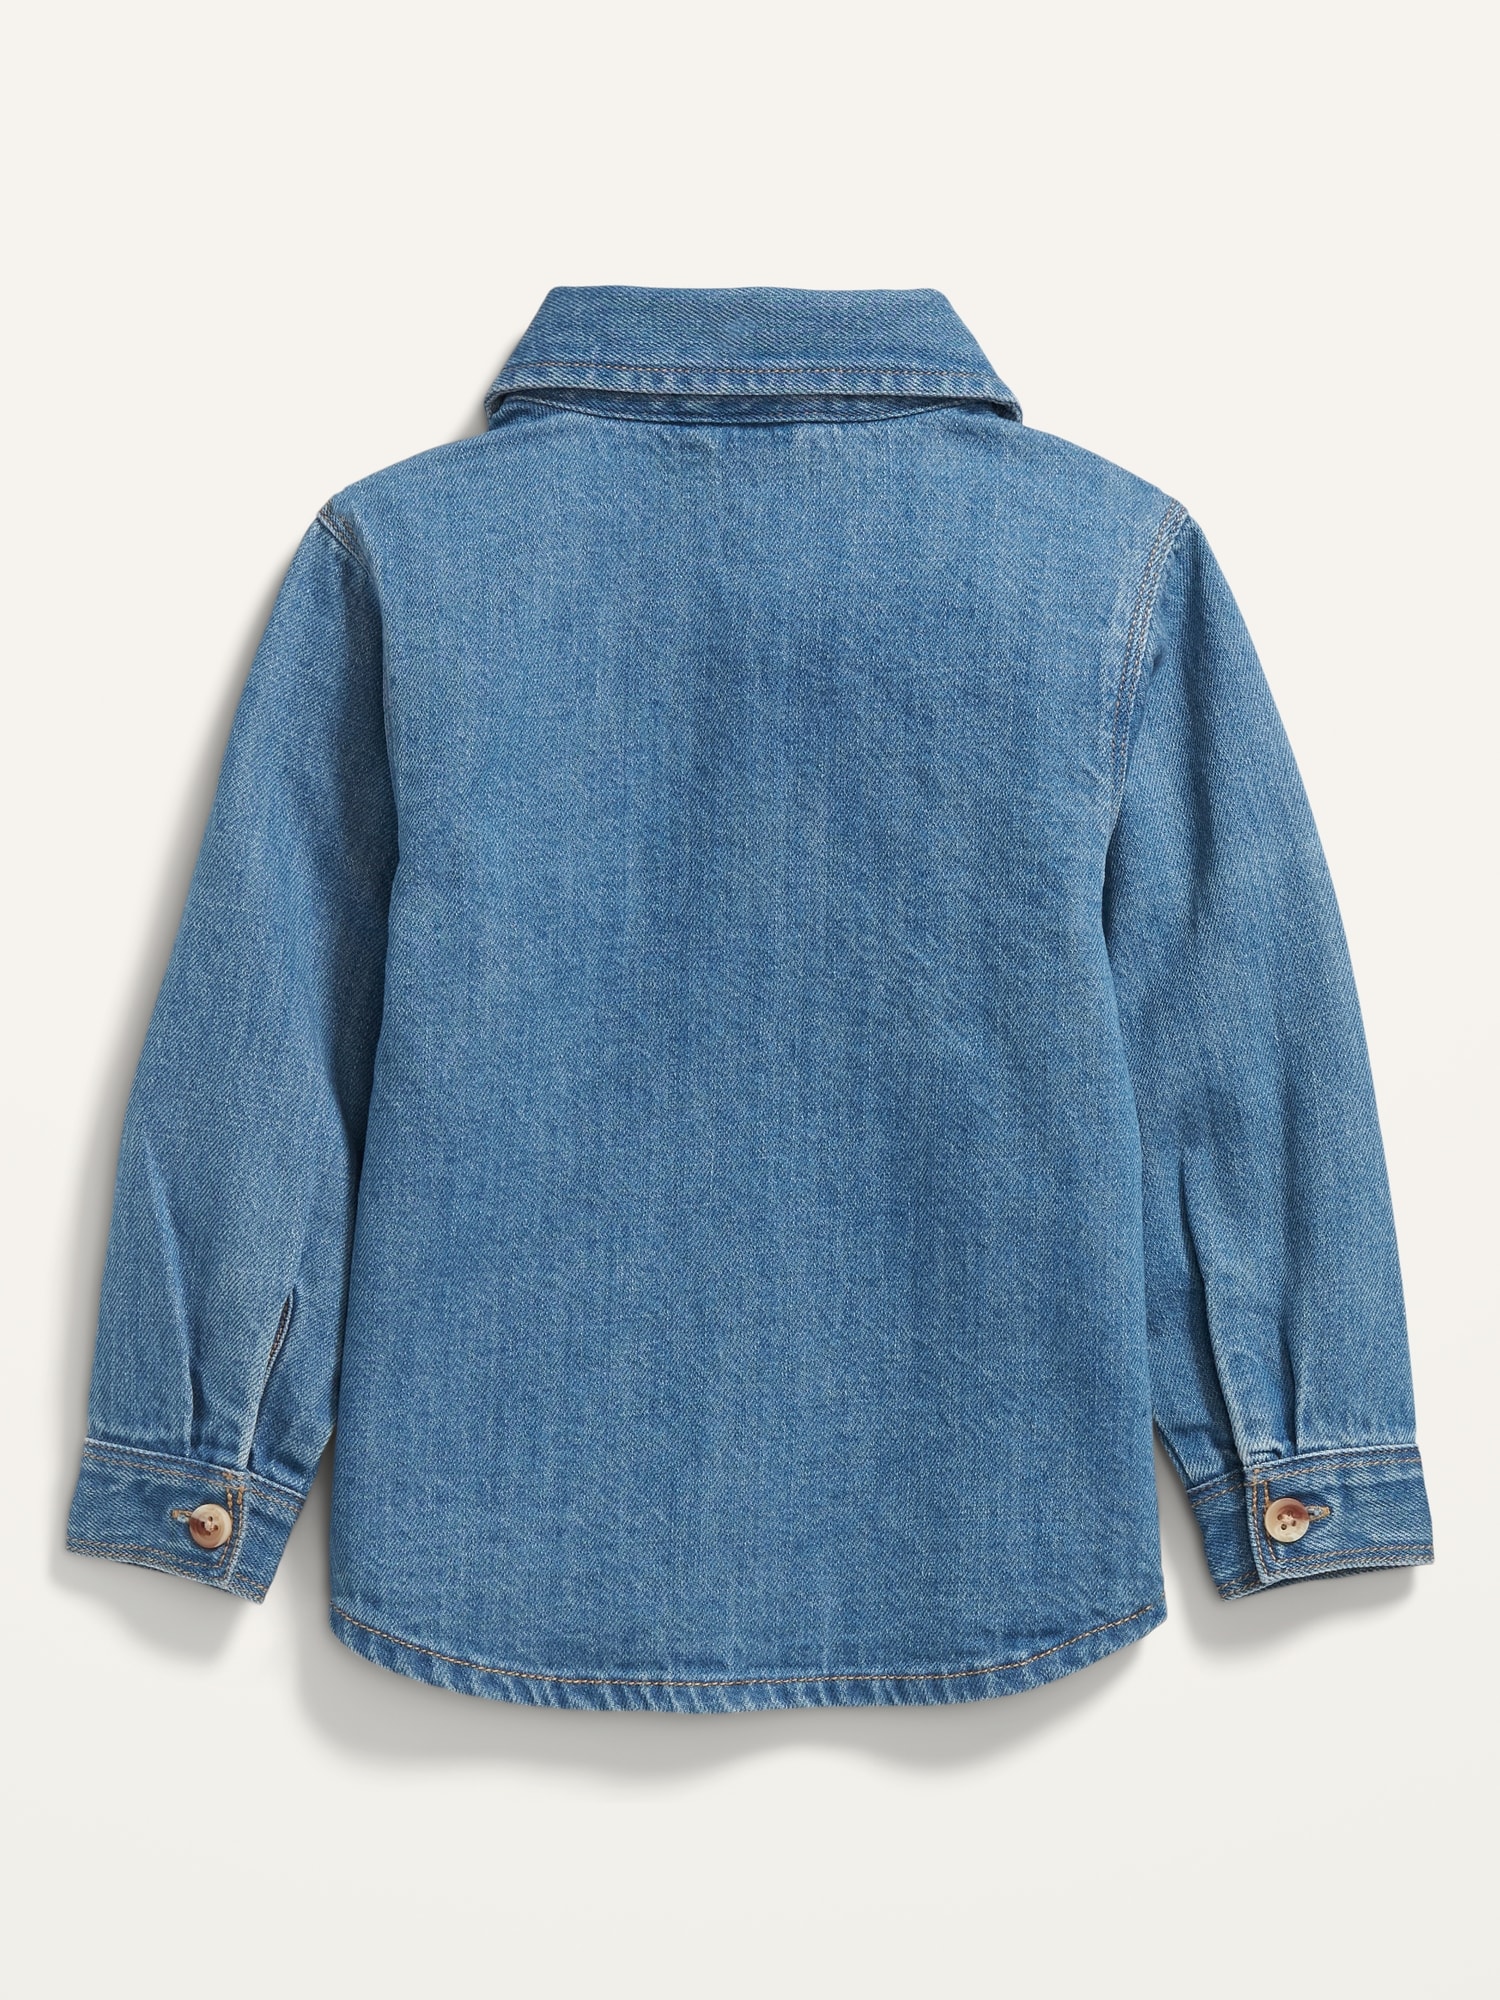 Jean Workwear Chore Jacket for Toddler Girls | Old Navy